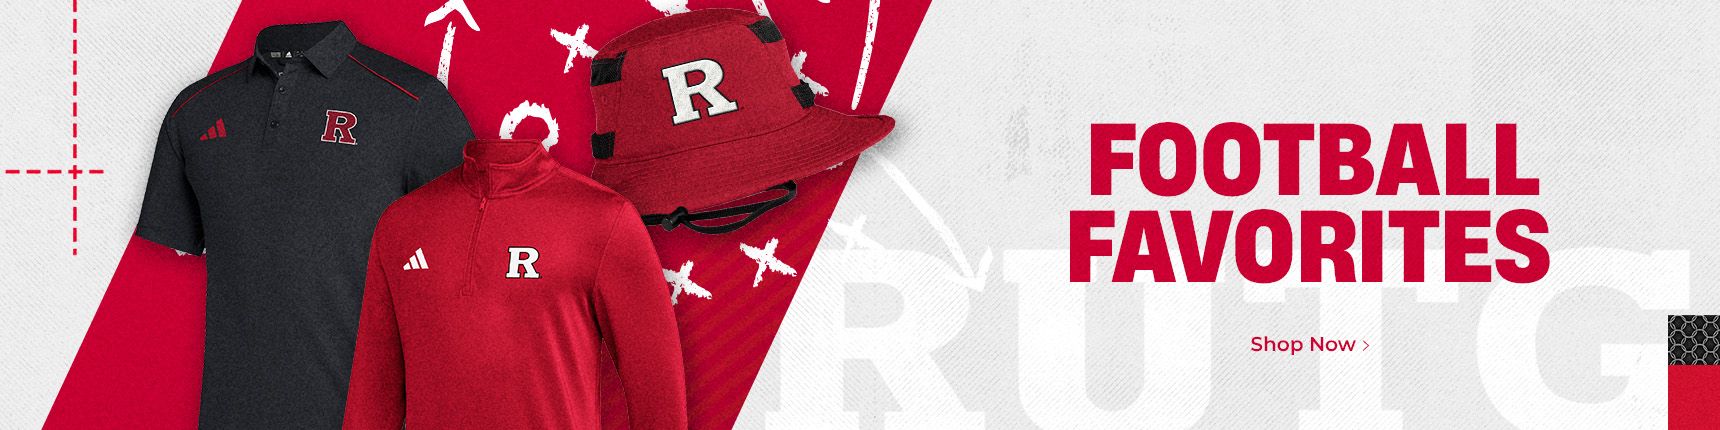 Rutgers Football Jersey Nike #7 - Scarlet Fever Rutgers Gear